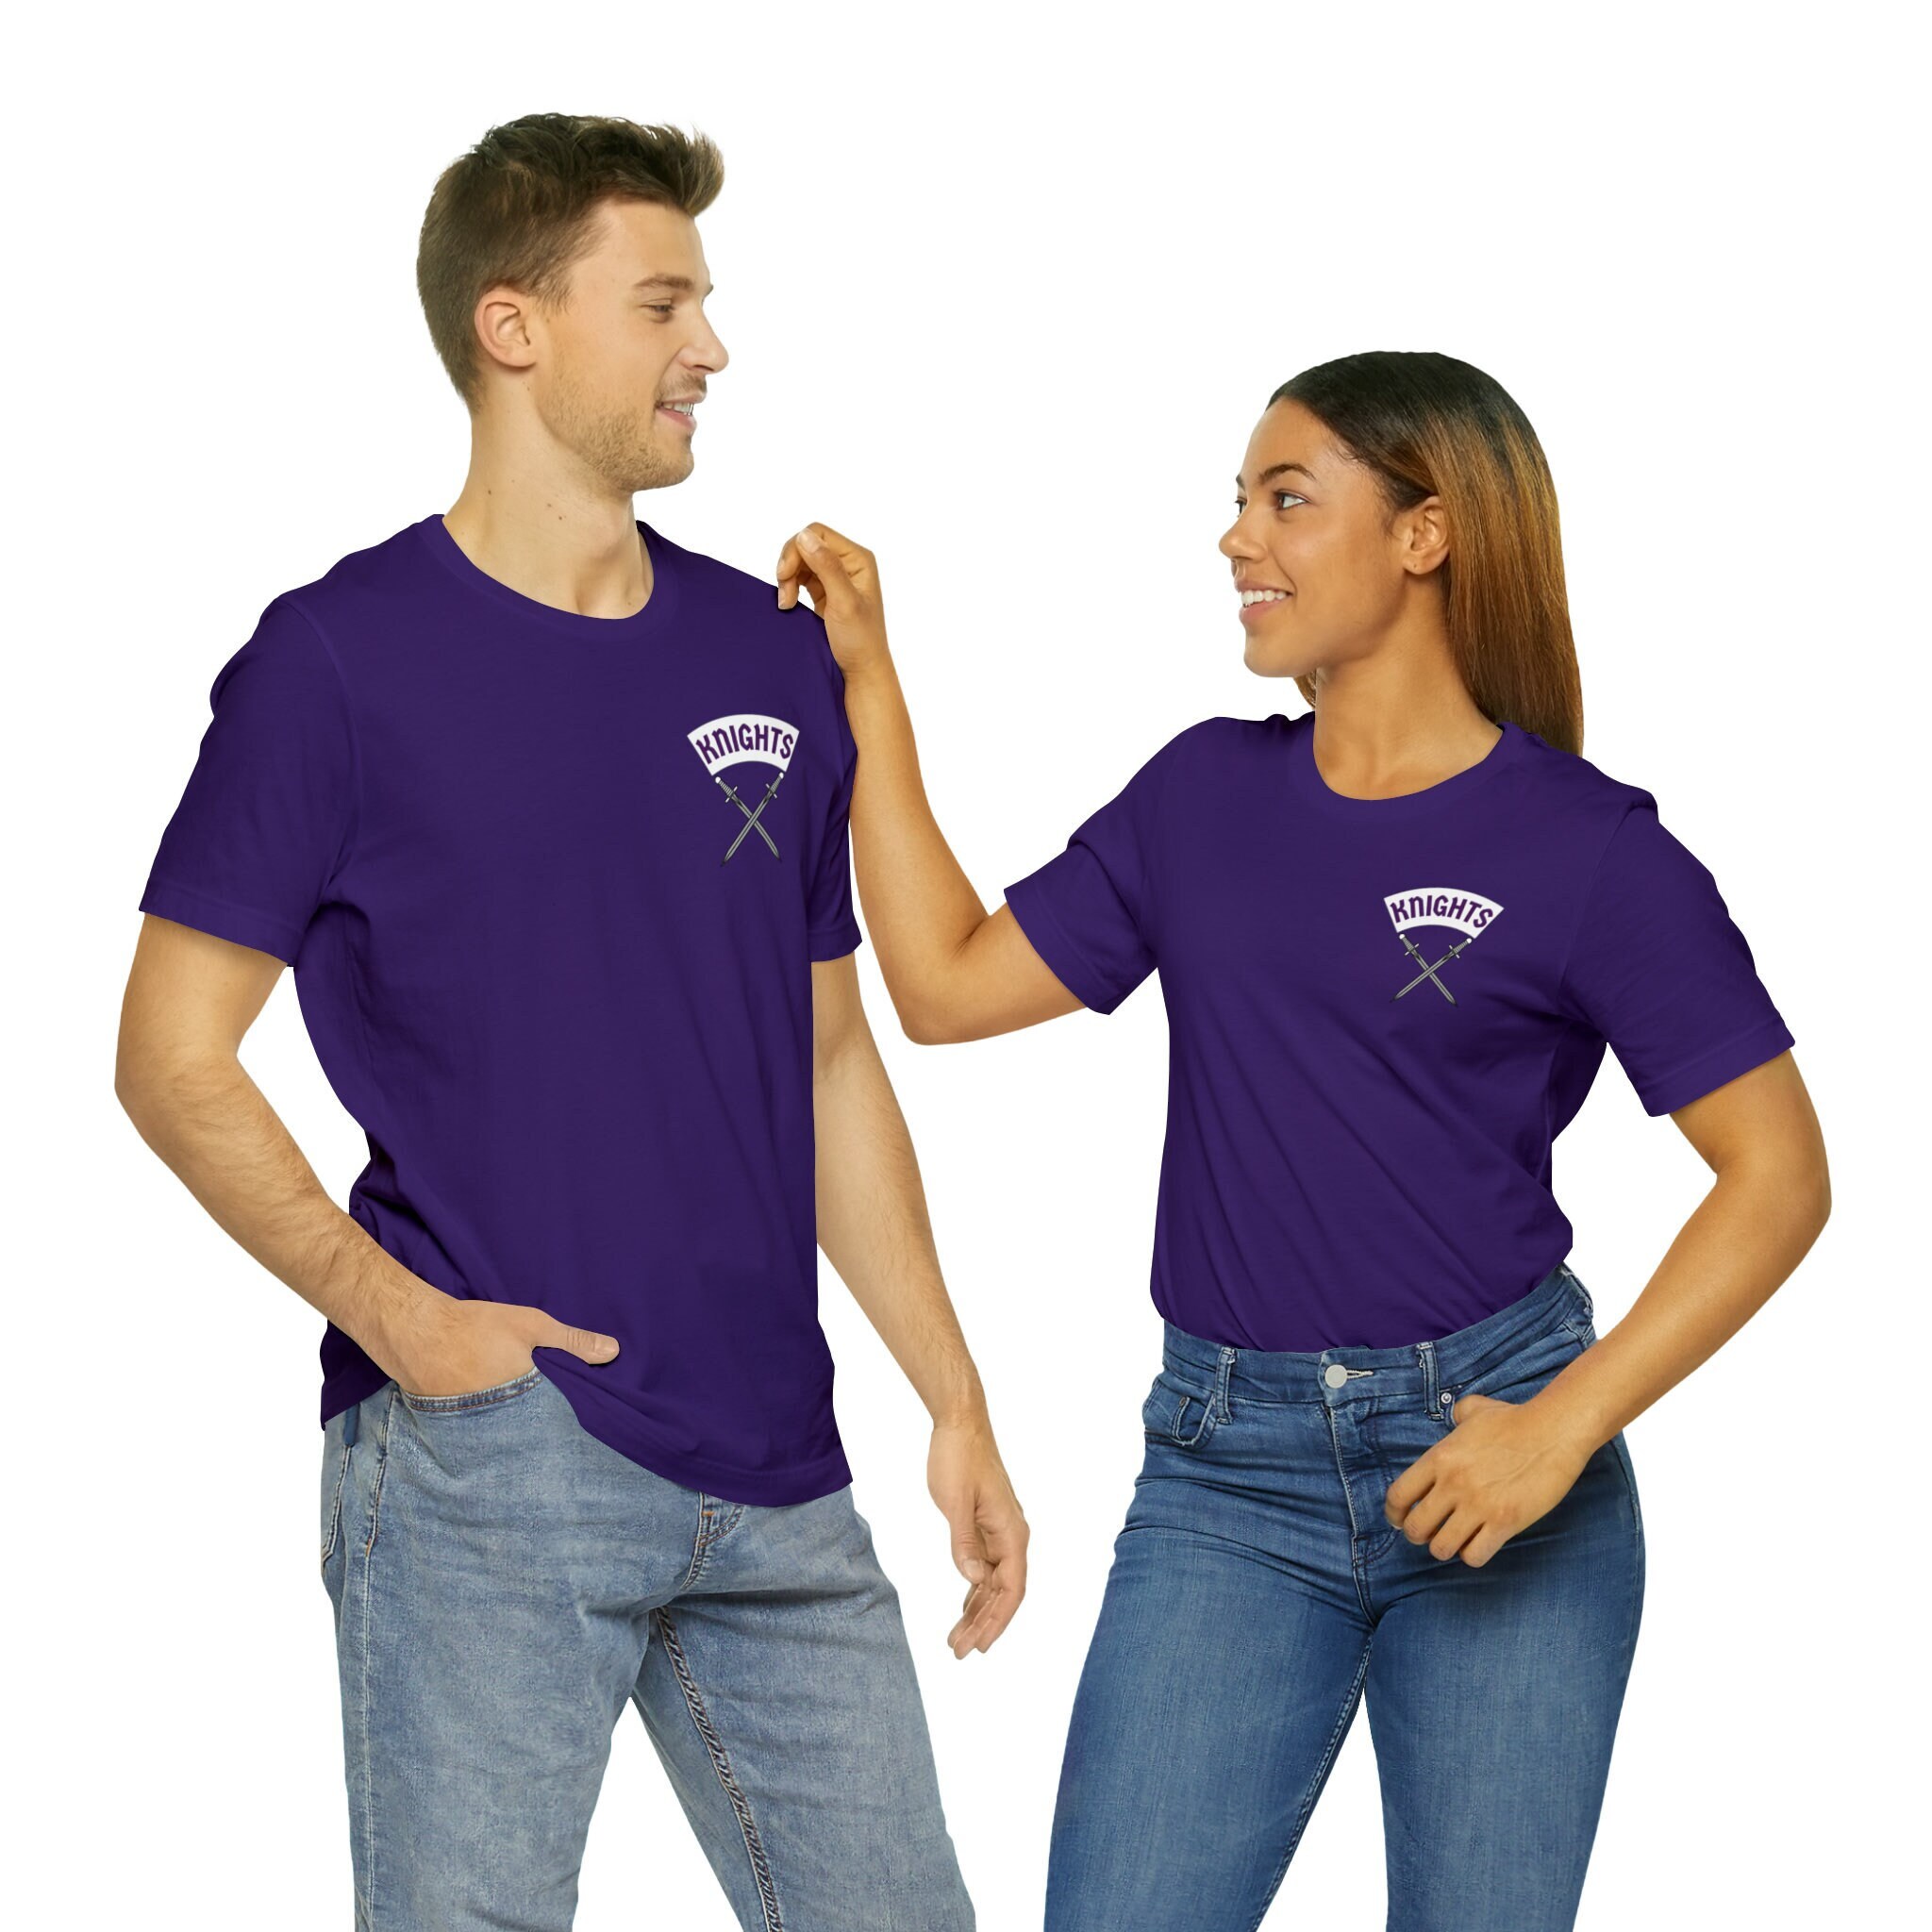 Zazzle 324 Knights Air Force Basic Training Graduation T-Shirt, Men's, Size: Adult S, Purple